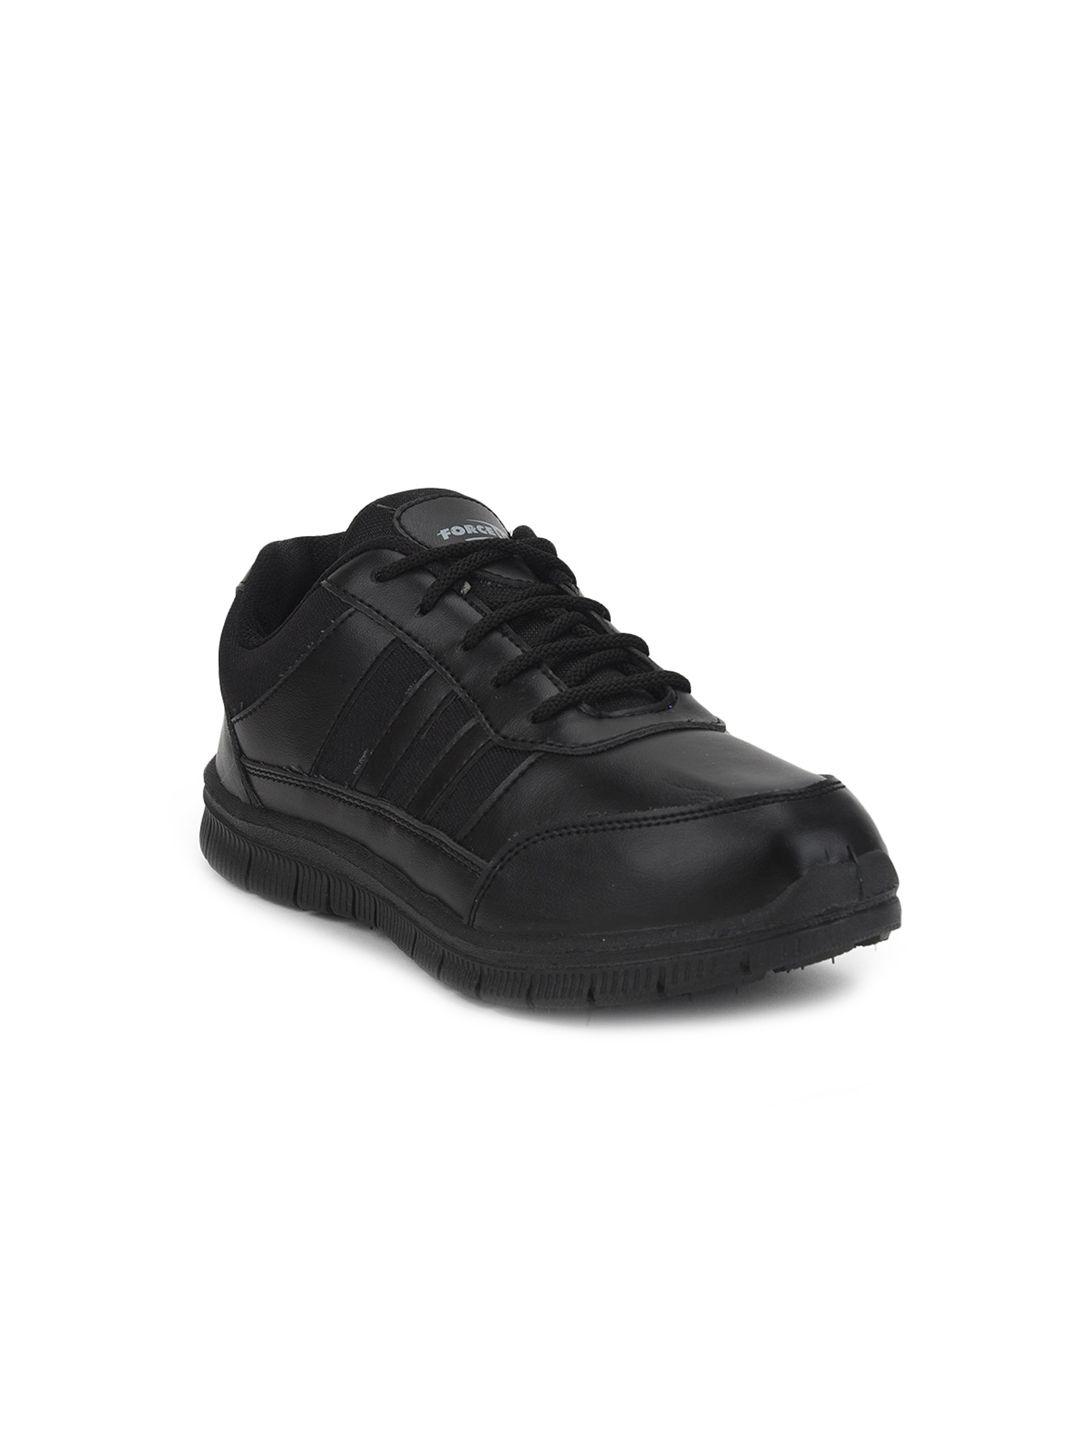 liberty-boys-black-sneakers